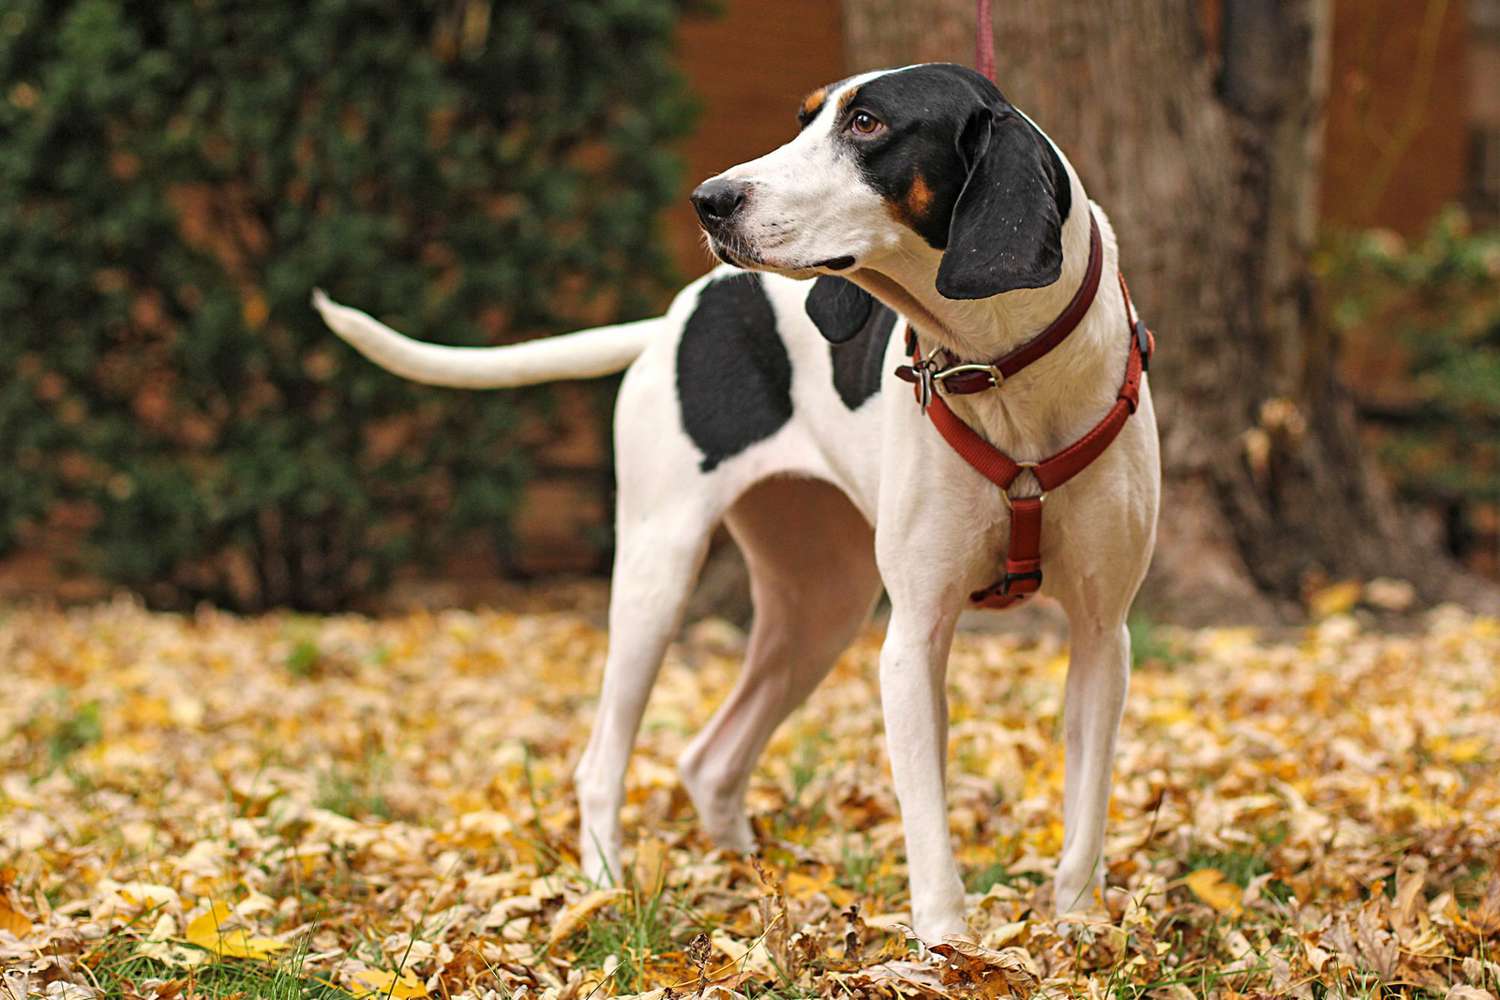 Treeing Walker Coonhound standing in autumn leaves